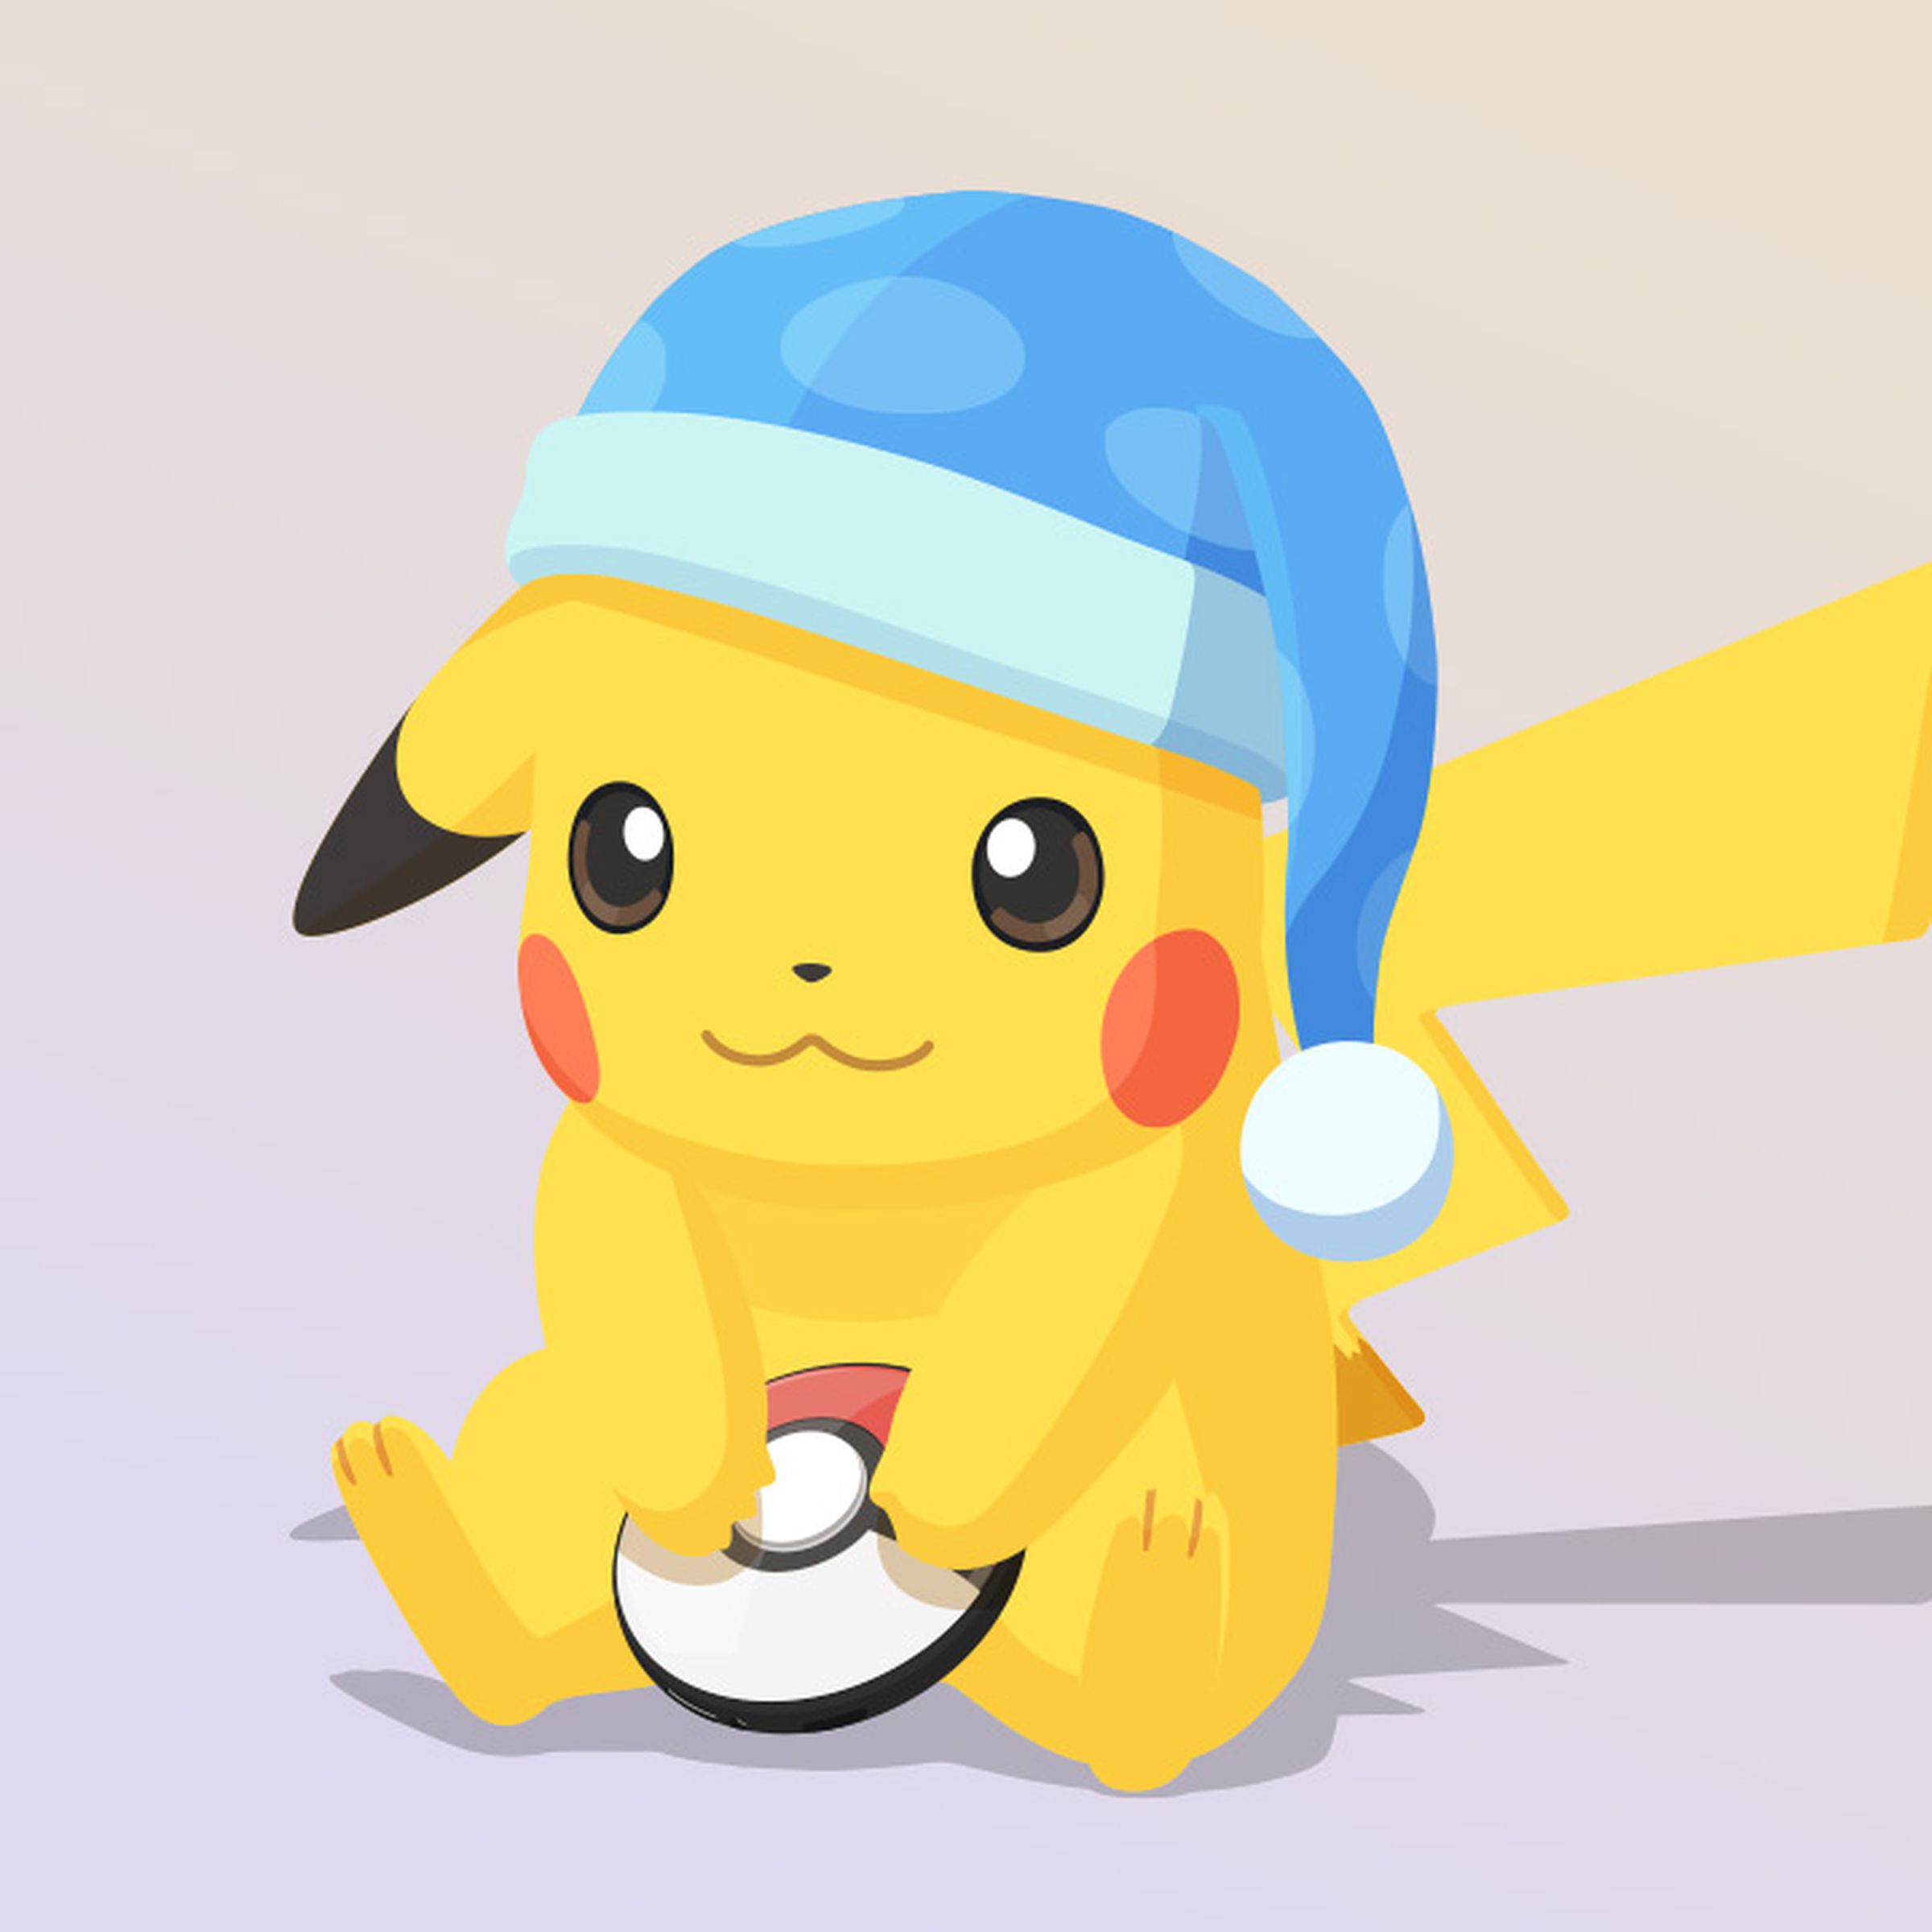 Key art from Pokémon Sleep featuring a Pikachu in a blue sleeping cap holding a small Pokémon Go Plus+ device.